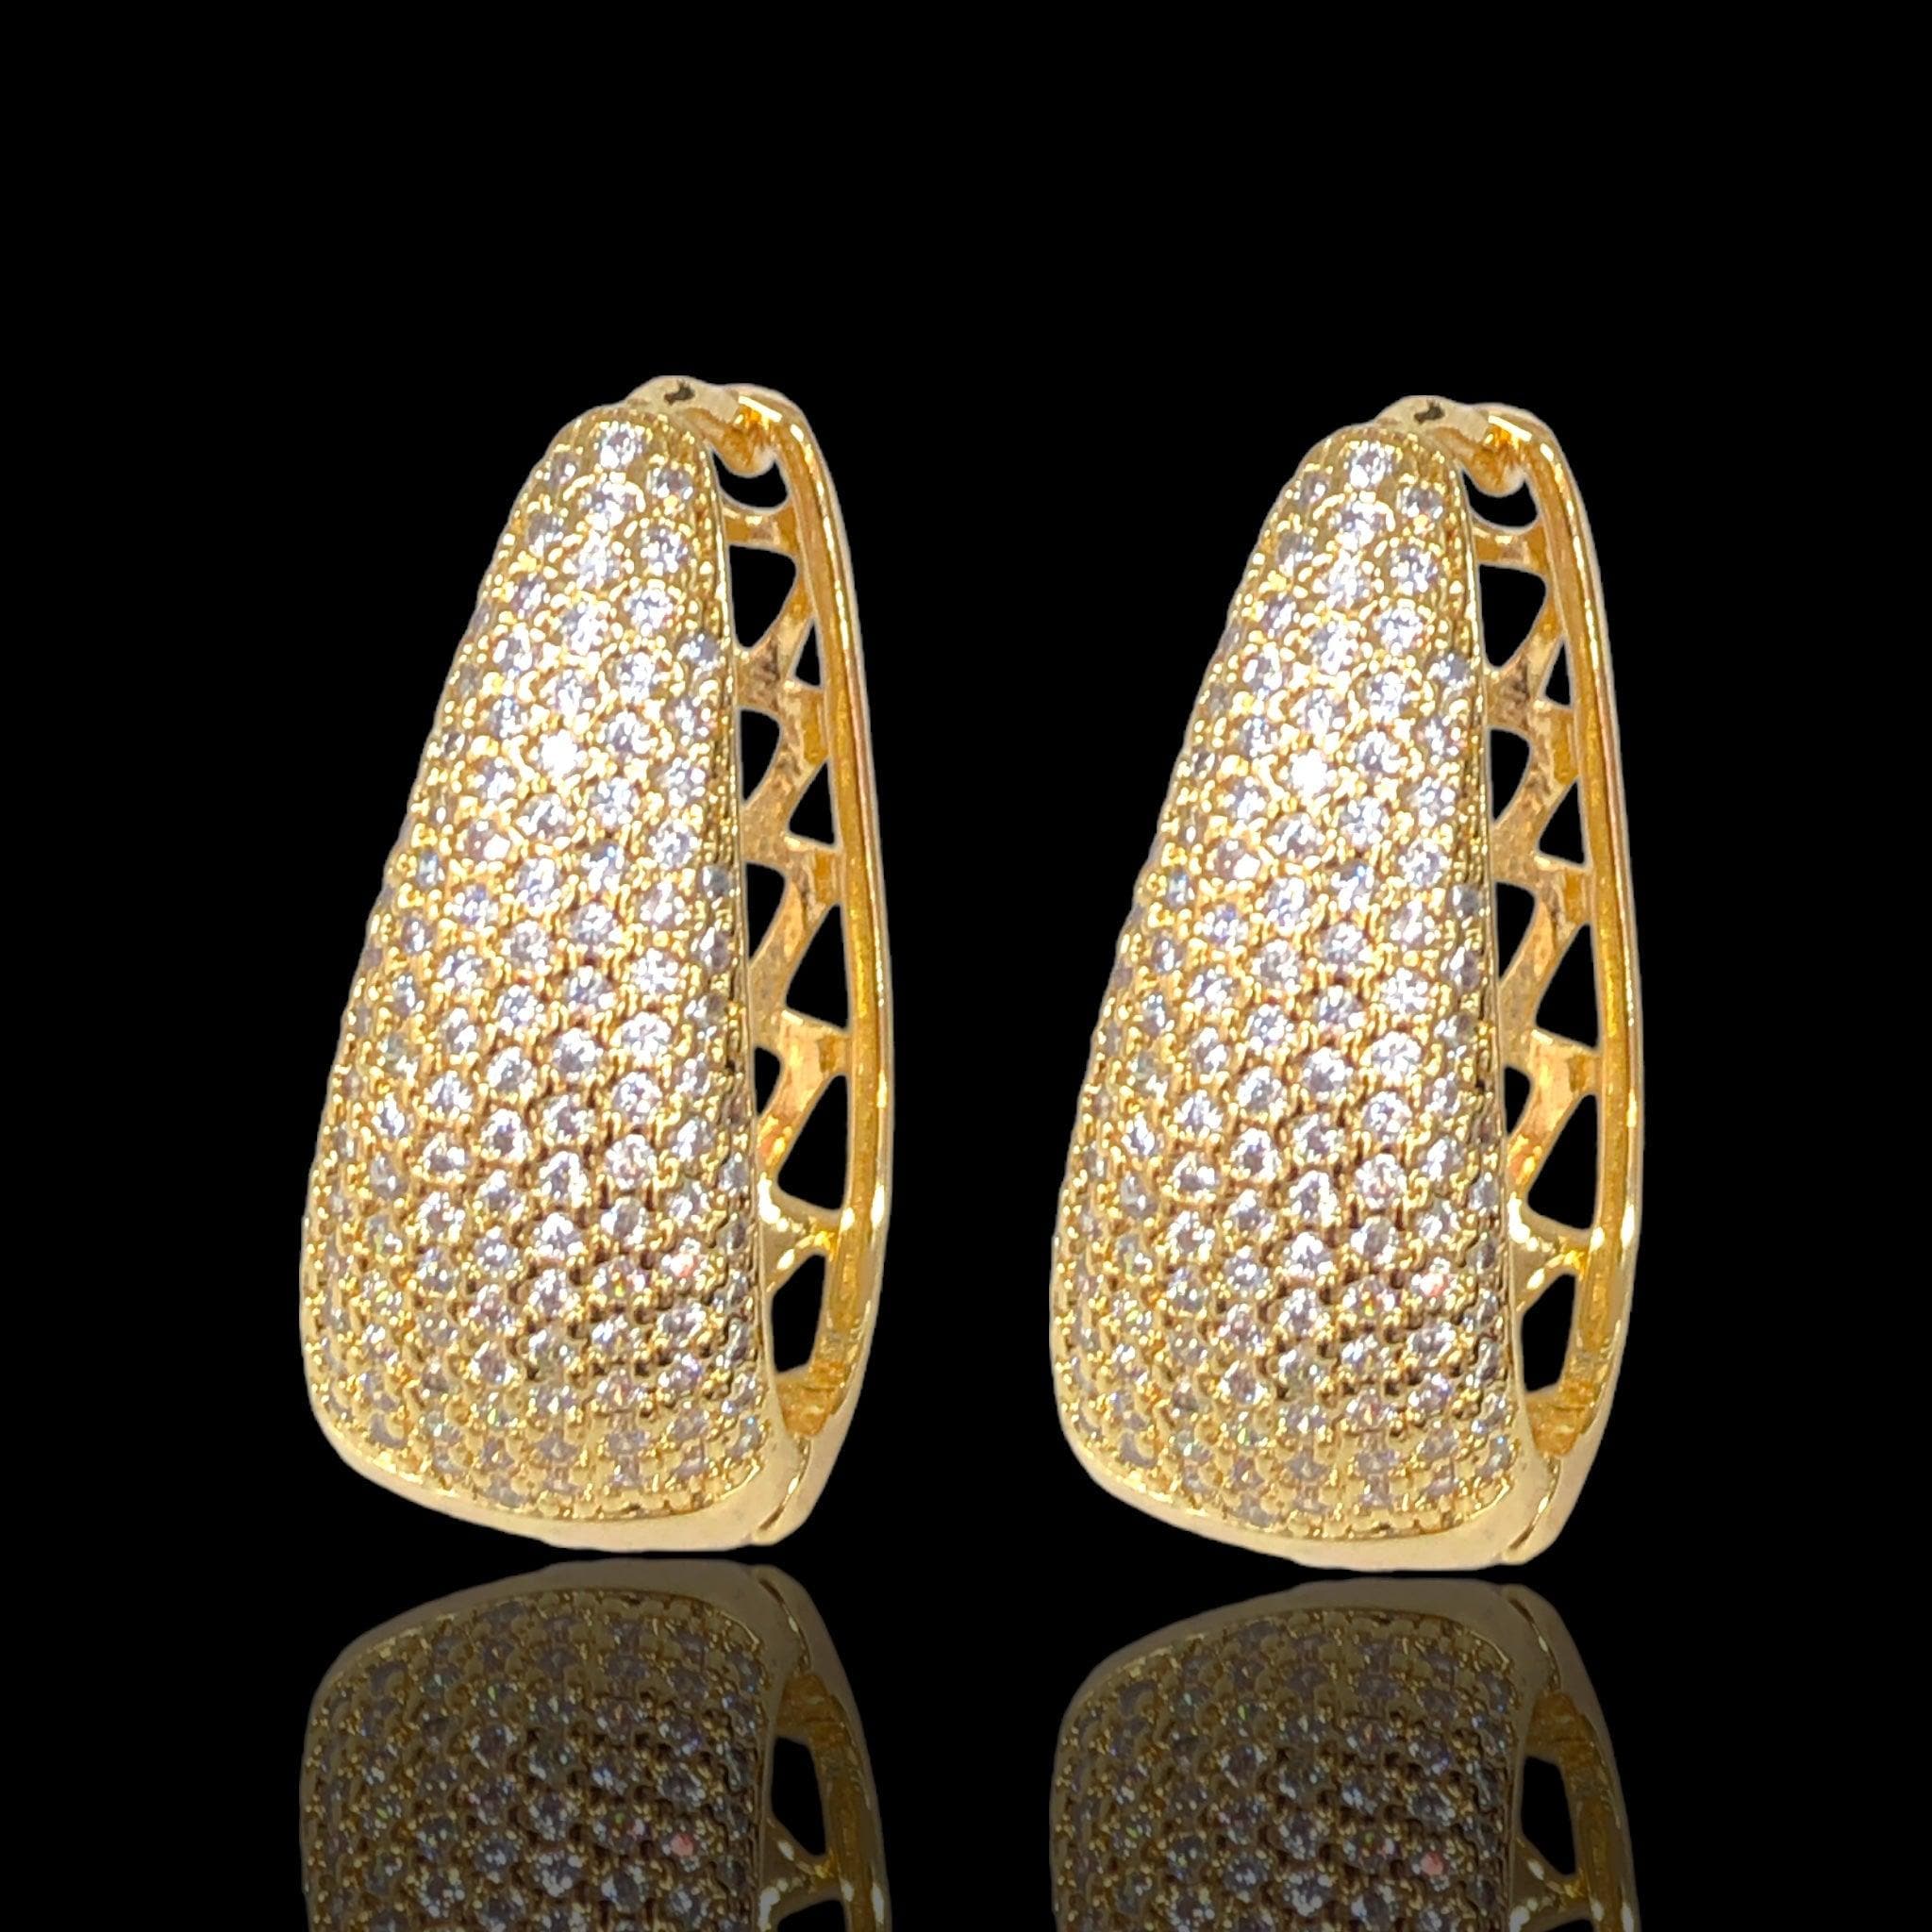 18K Gold Filled Parisian Royal CZ Earrings- kuania oro laminado